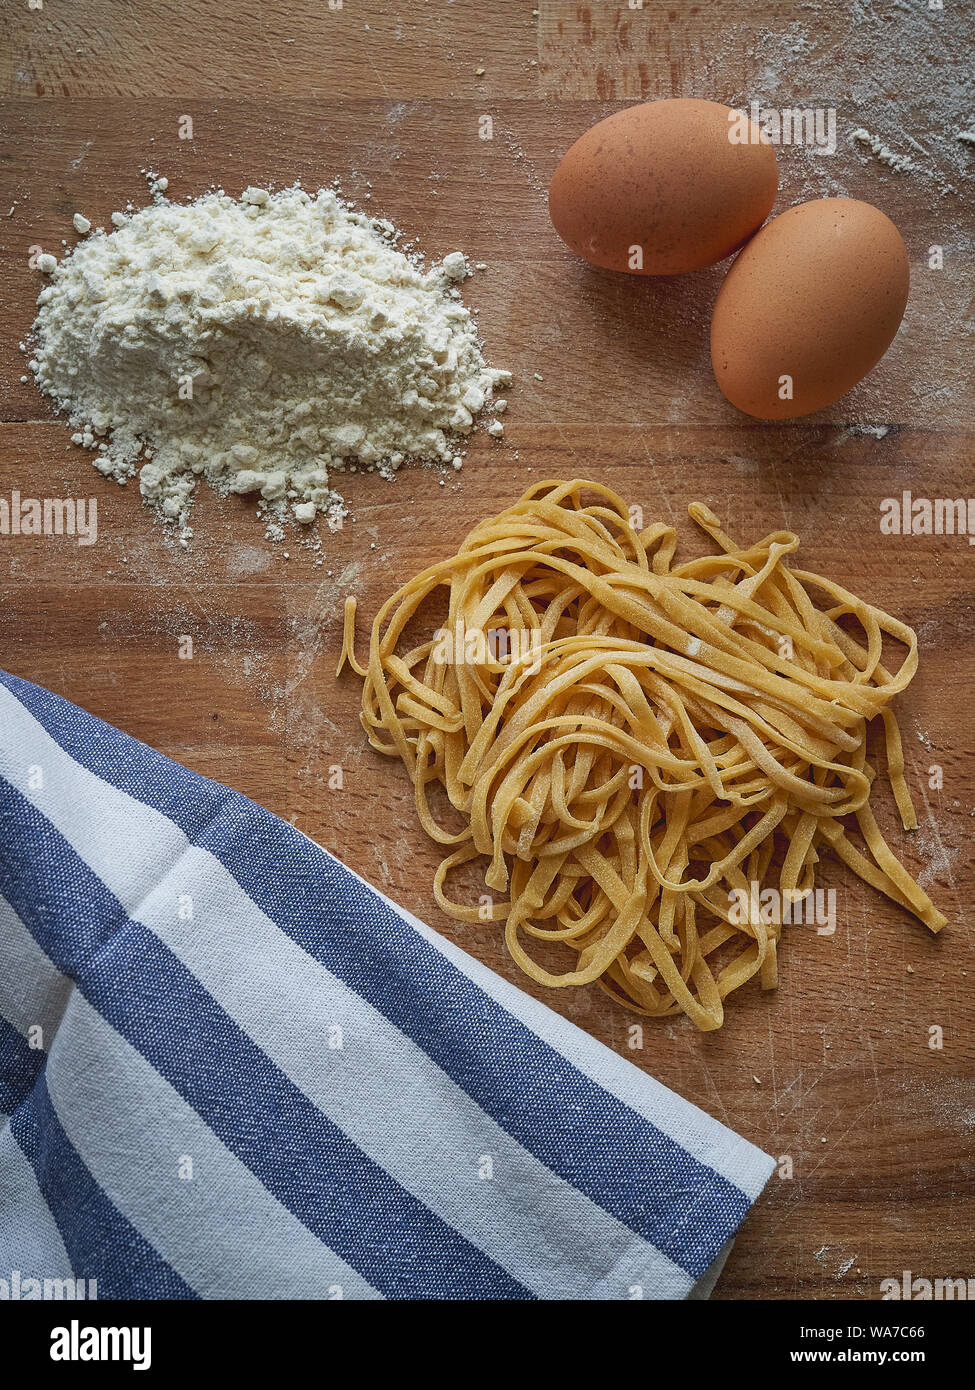 Handmade stringozzi (or strangozzi), an Italian wheat pasta similar to noodles, among the more notable of those produced in the Umbria region. Stock Photo